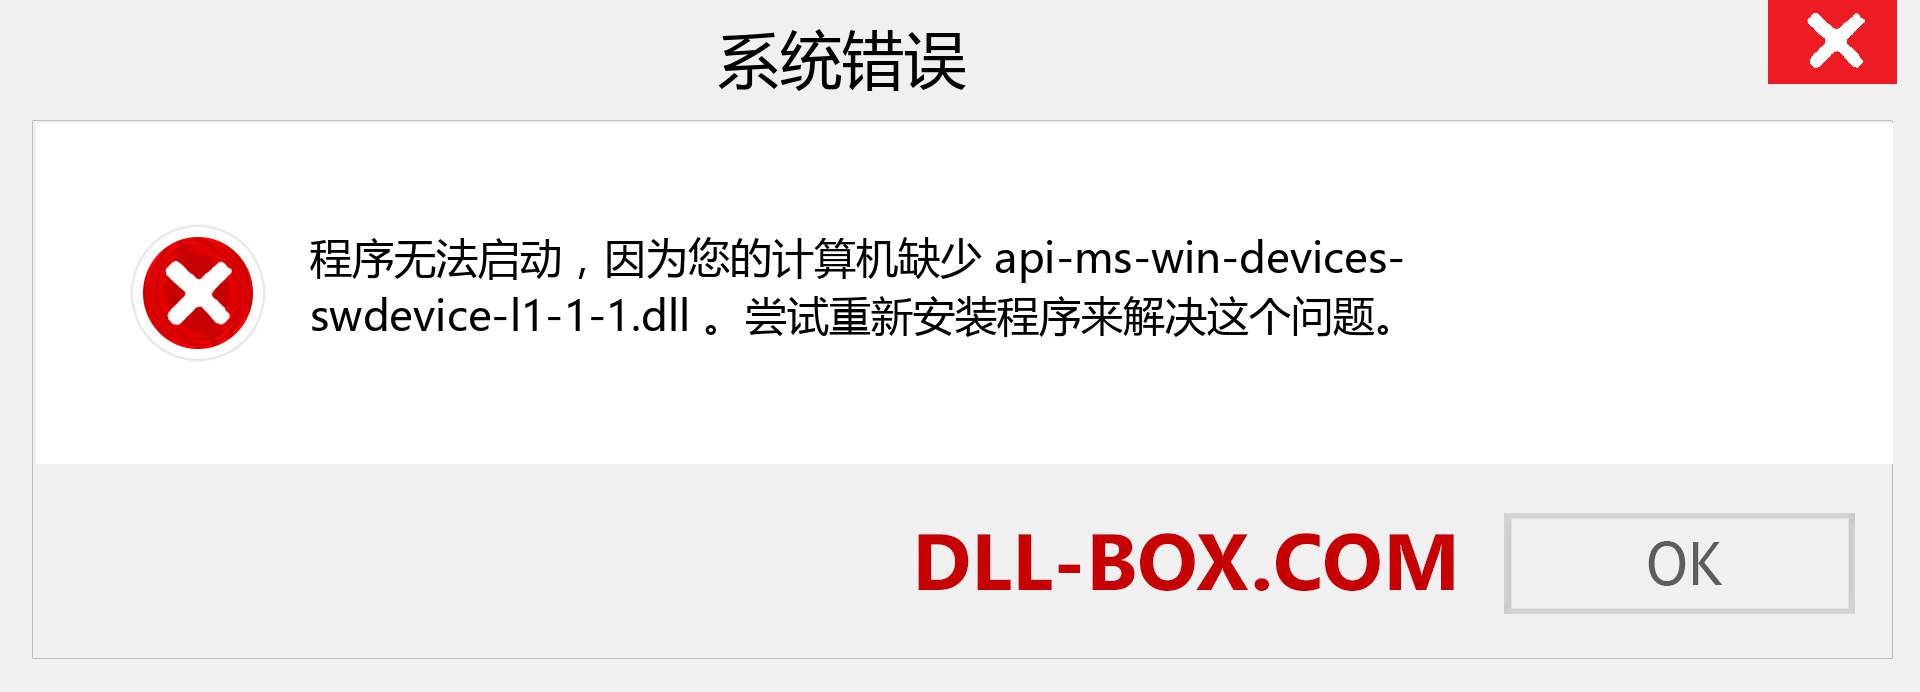 api-ms-win-devices-swdevice-l1-1-1.dll 文件丢失？。 适用于 Windows 7、8、10 的下载 - 修复 Windows、照片、图像上的 api-ms-win-devices-swdevice-l1-1-1 dll 丢失错误